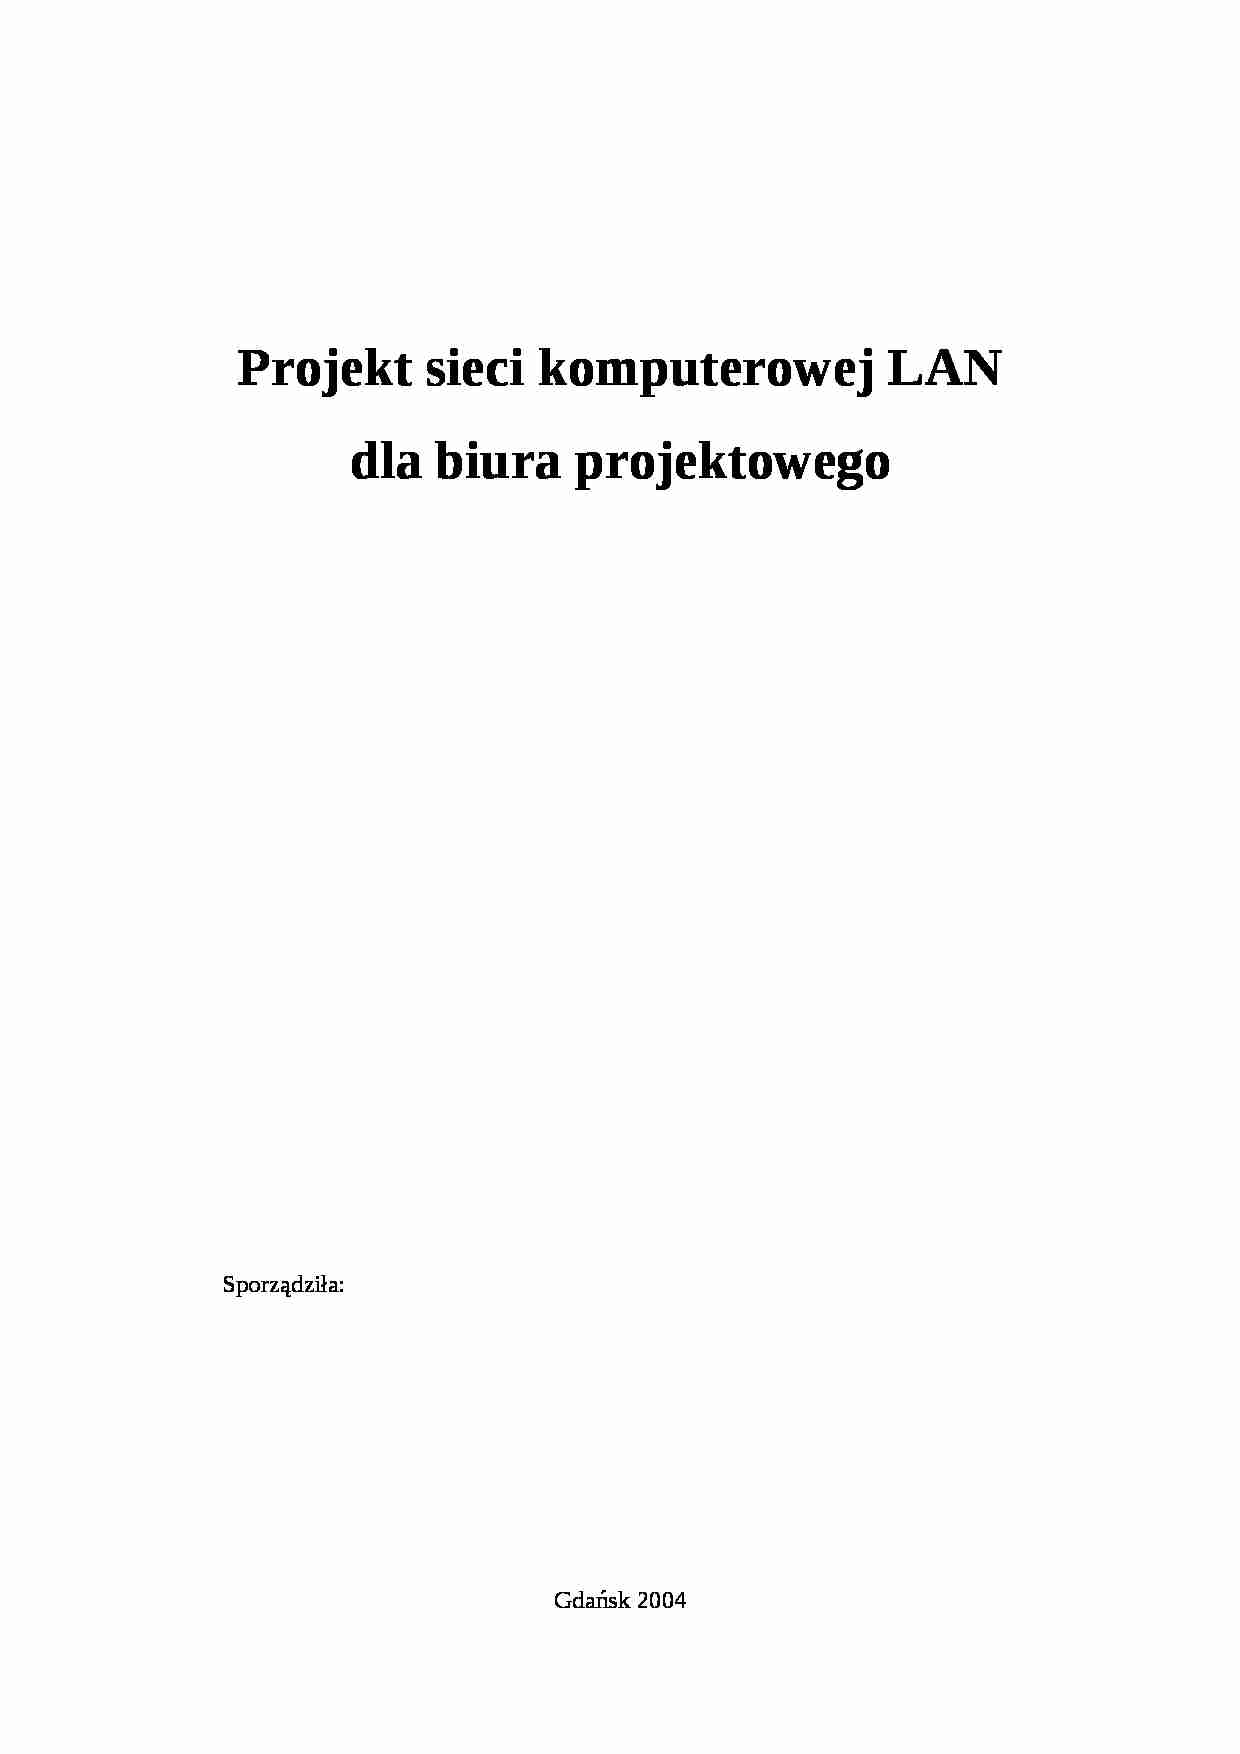 projekt sieci komputerowej LAN - strona 1